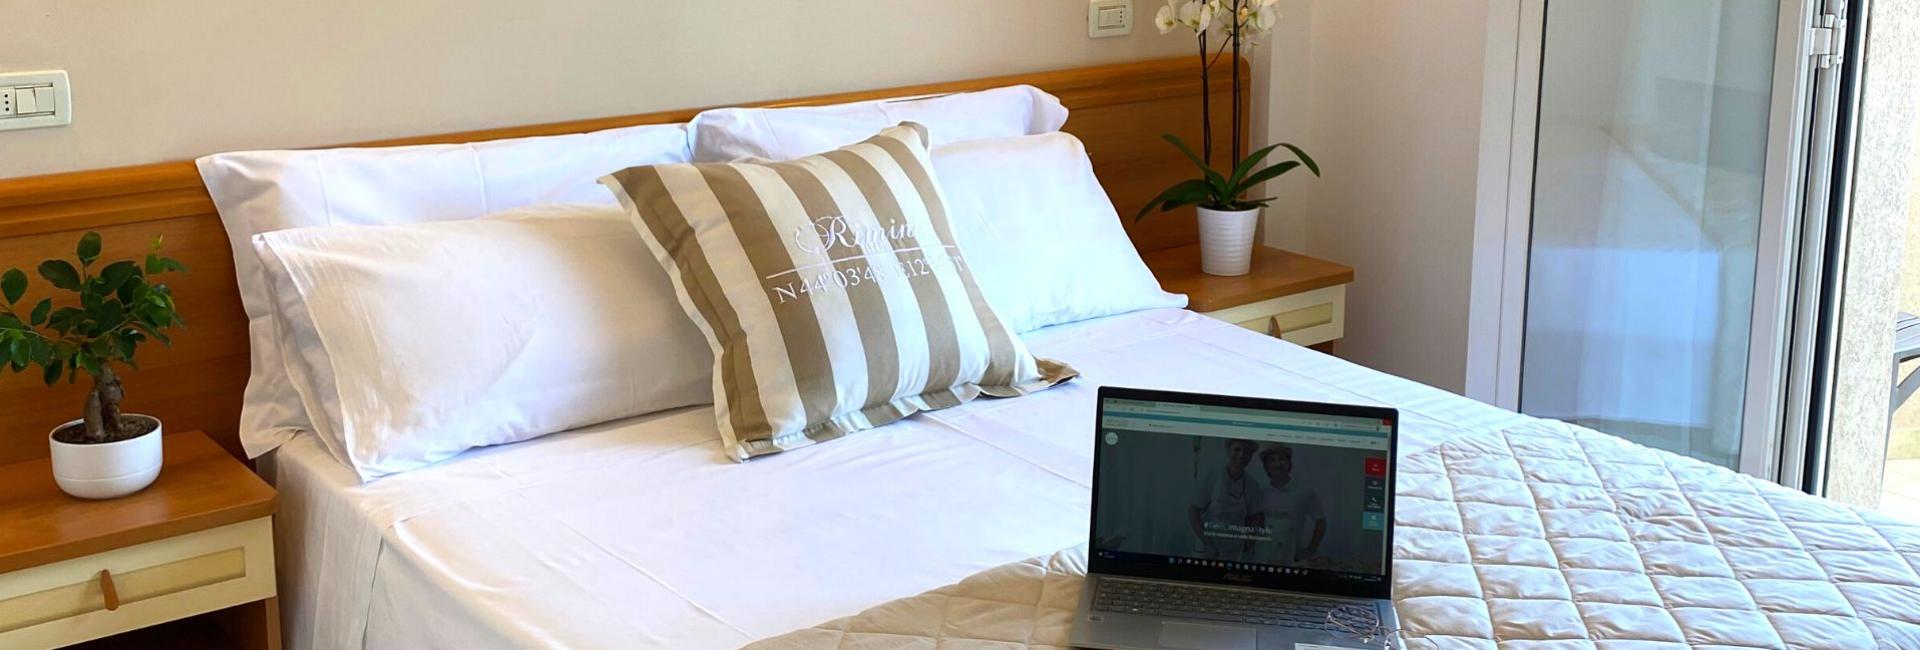 hotelapogeo en offer-last-week-of-august-all-inclusive-economic-packages 007